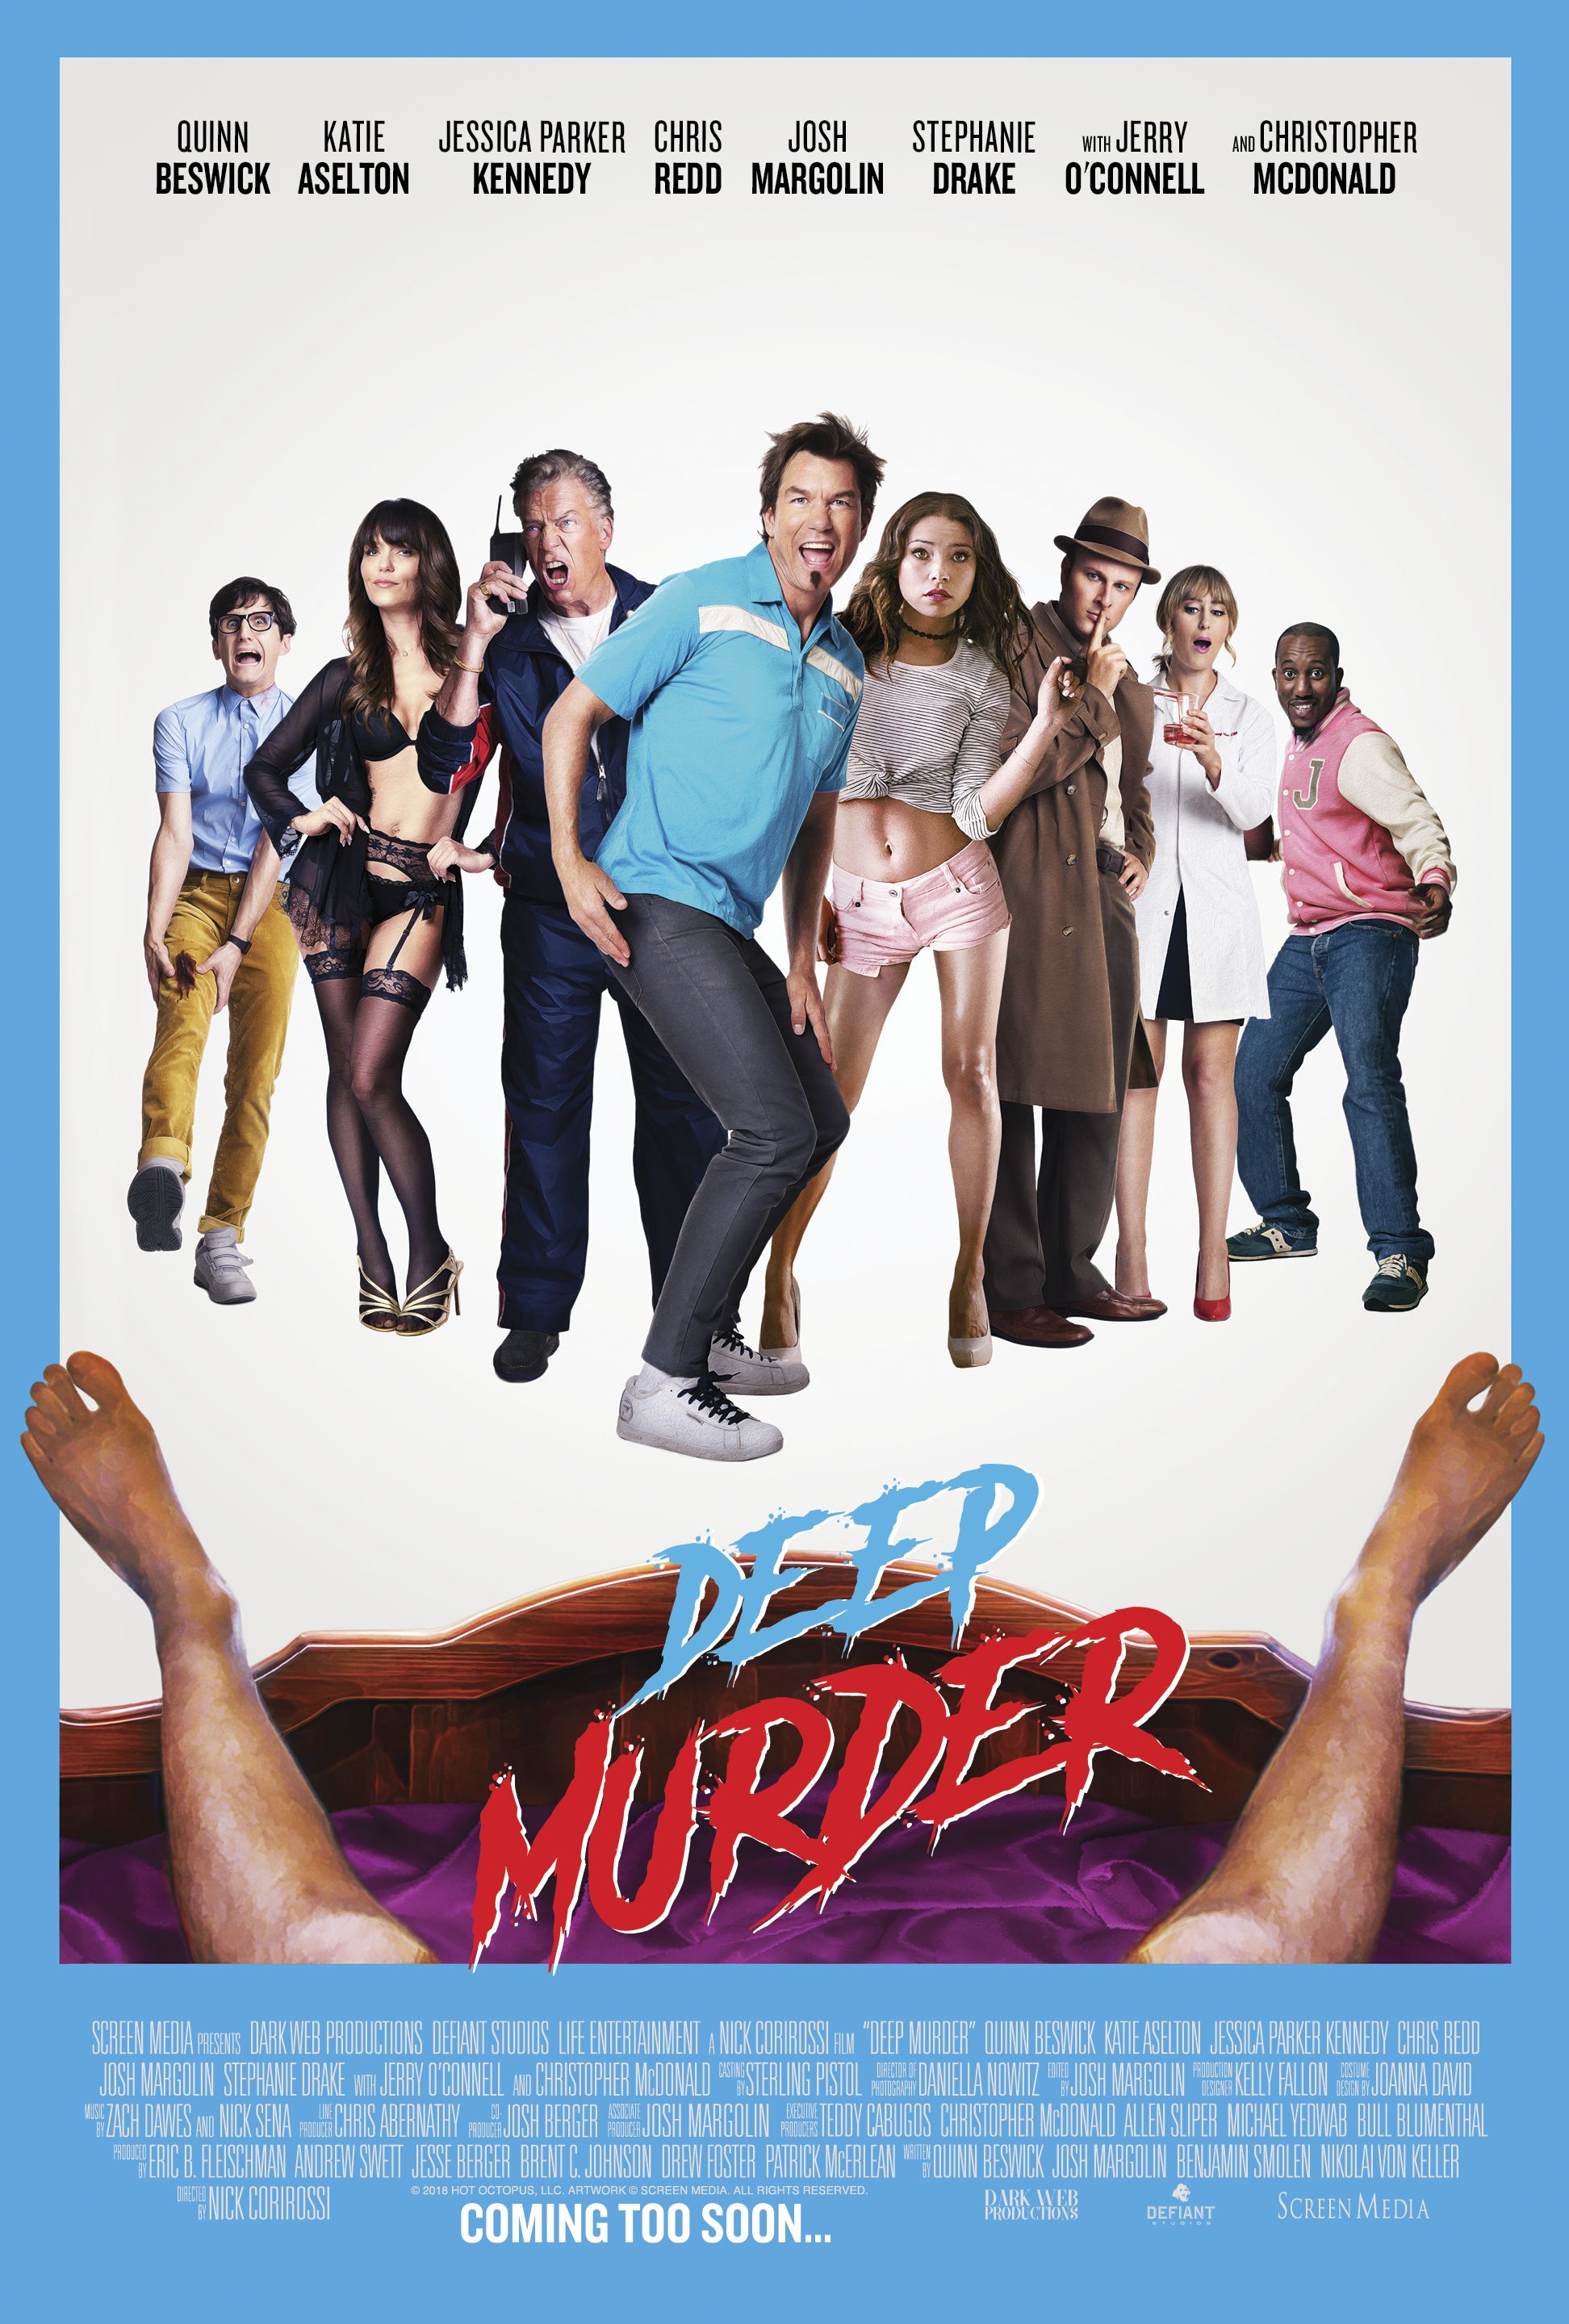 Deep Murder (2019) Hindi Dubbed Movie